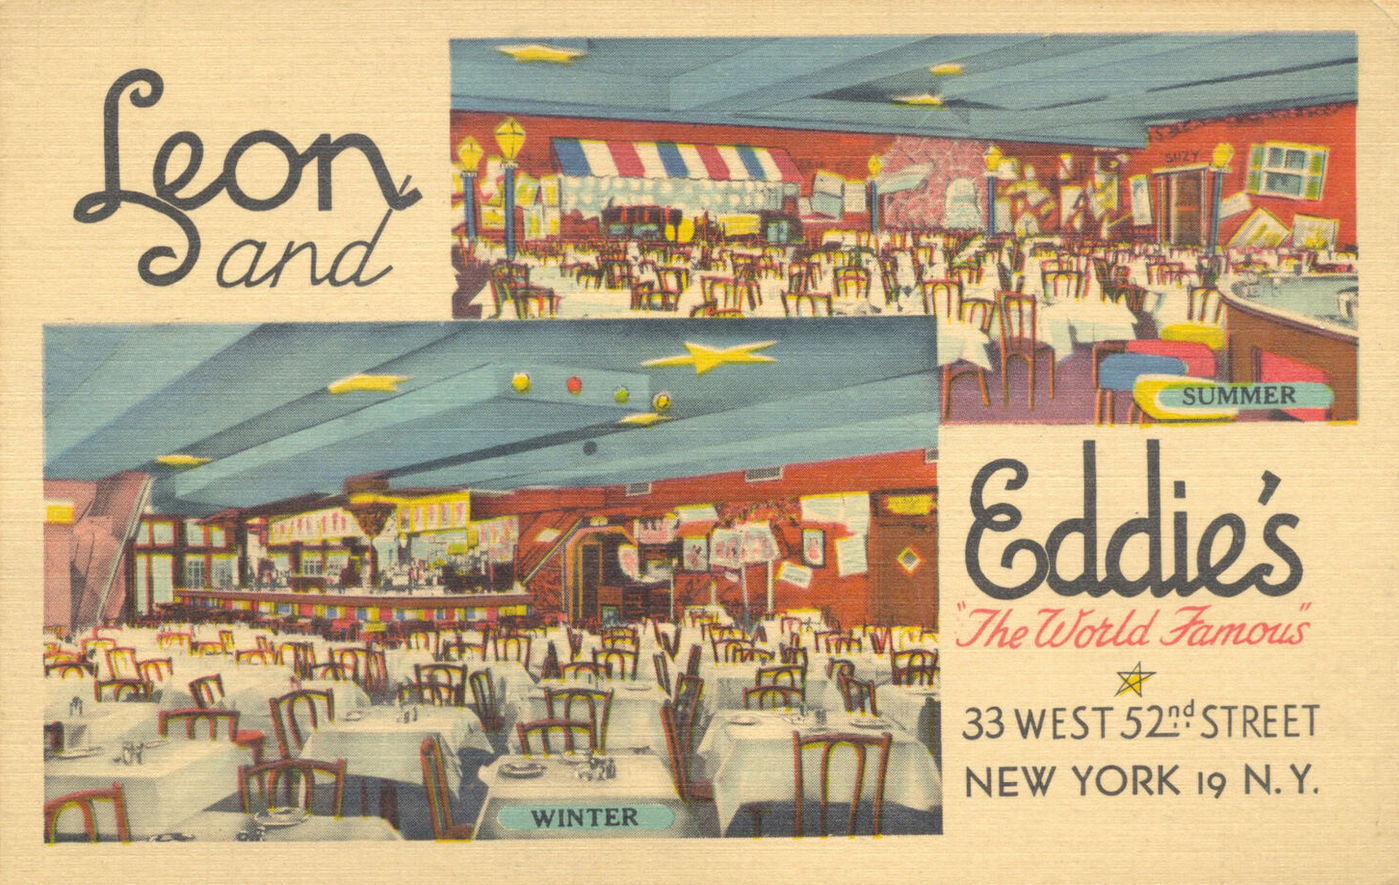  Leon & Eddie's 